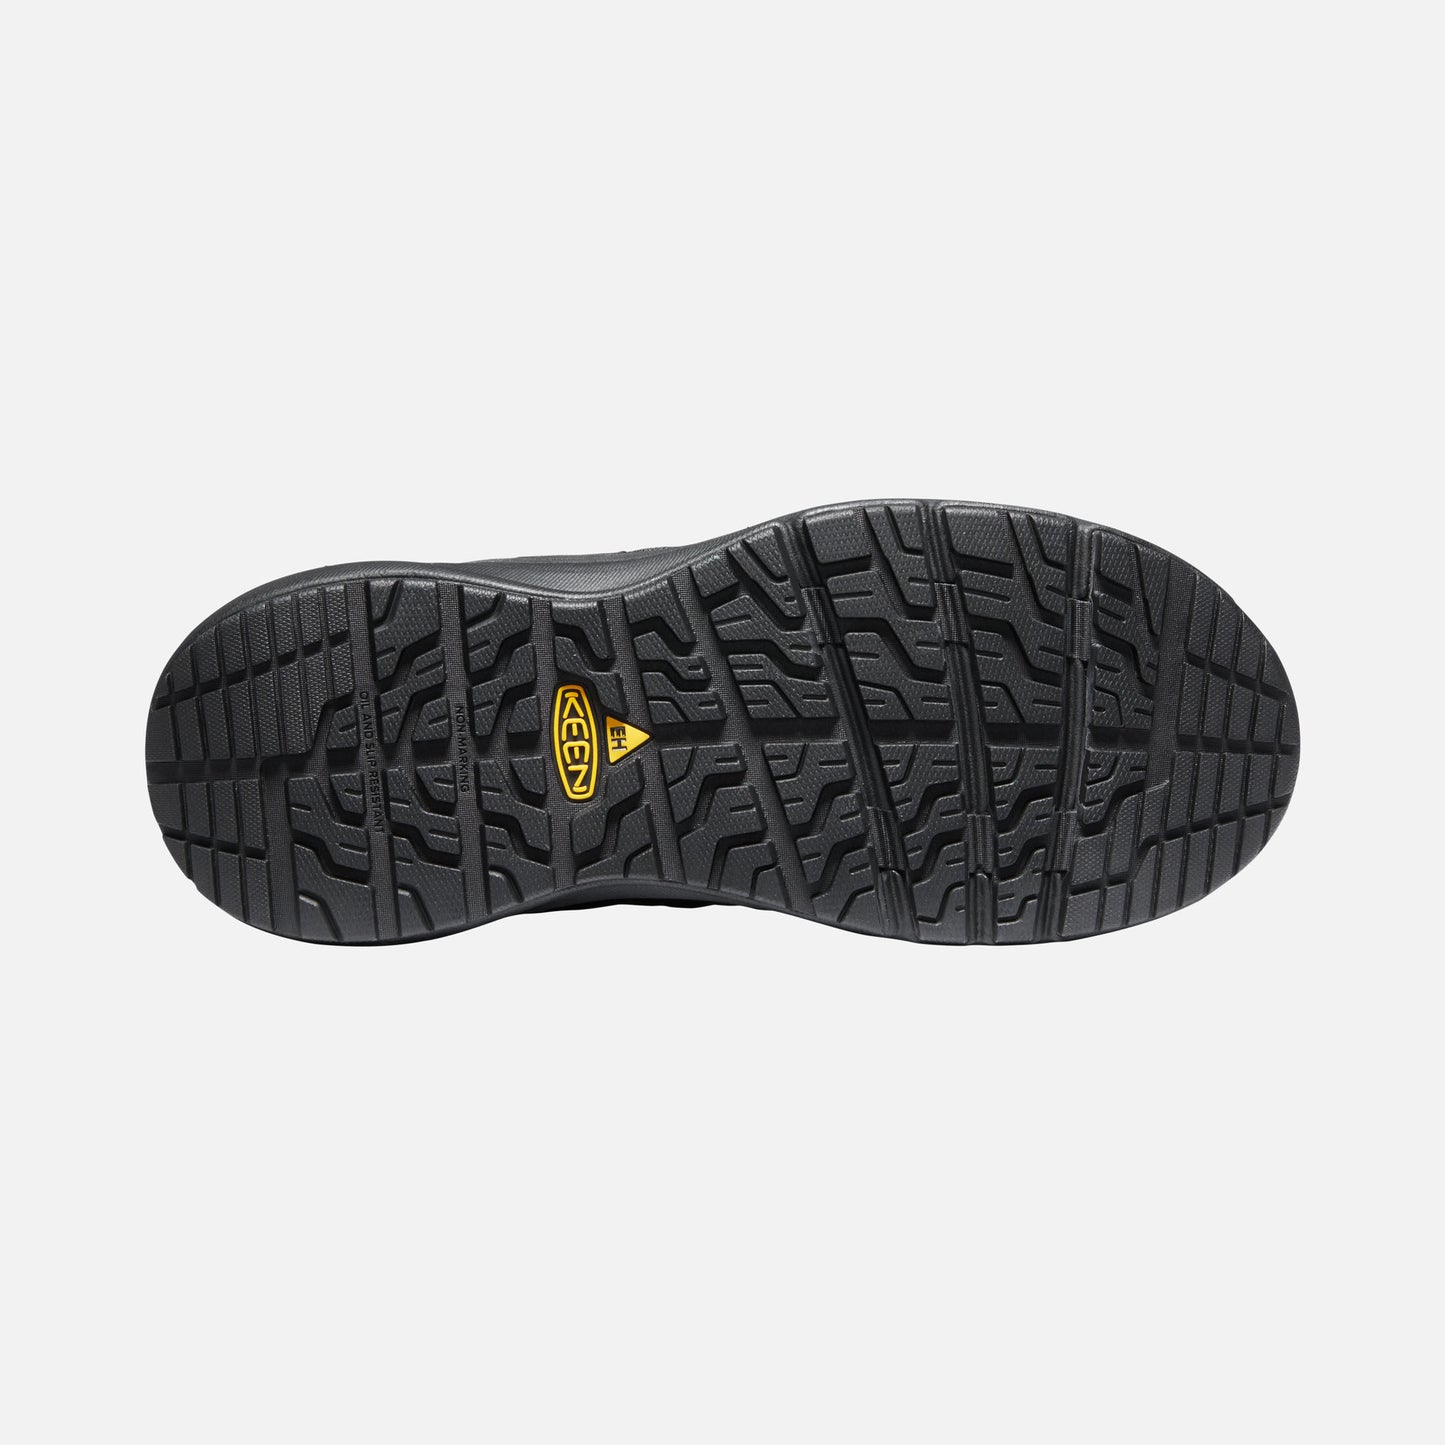 1024597 Keen Women's Vista Energy Shoe Fabric Upper (Carbon-Fiber Toe) (black)